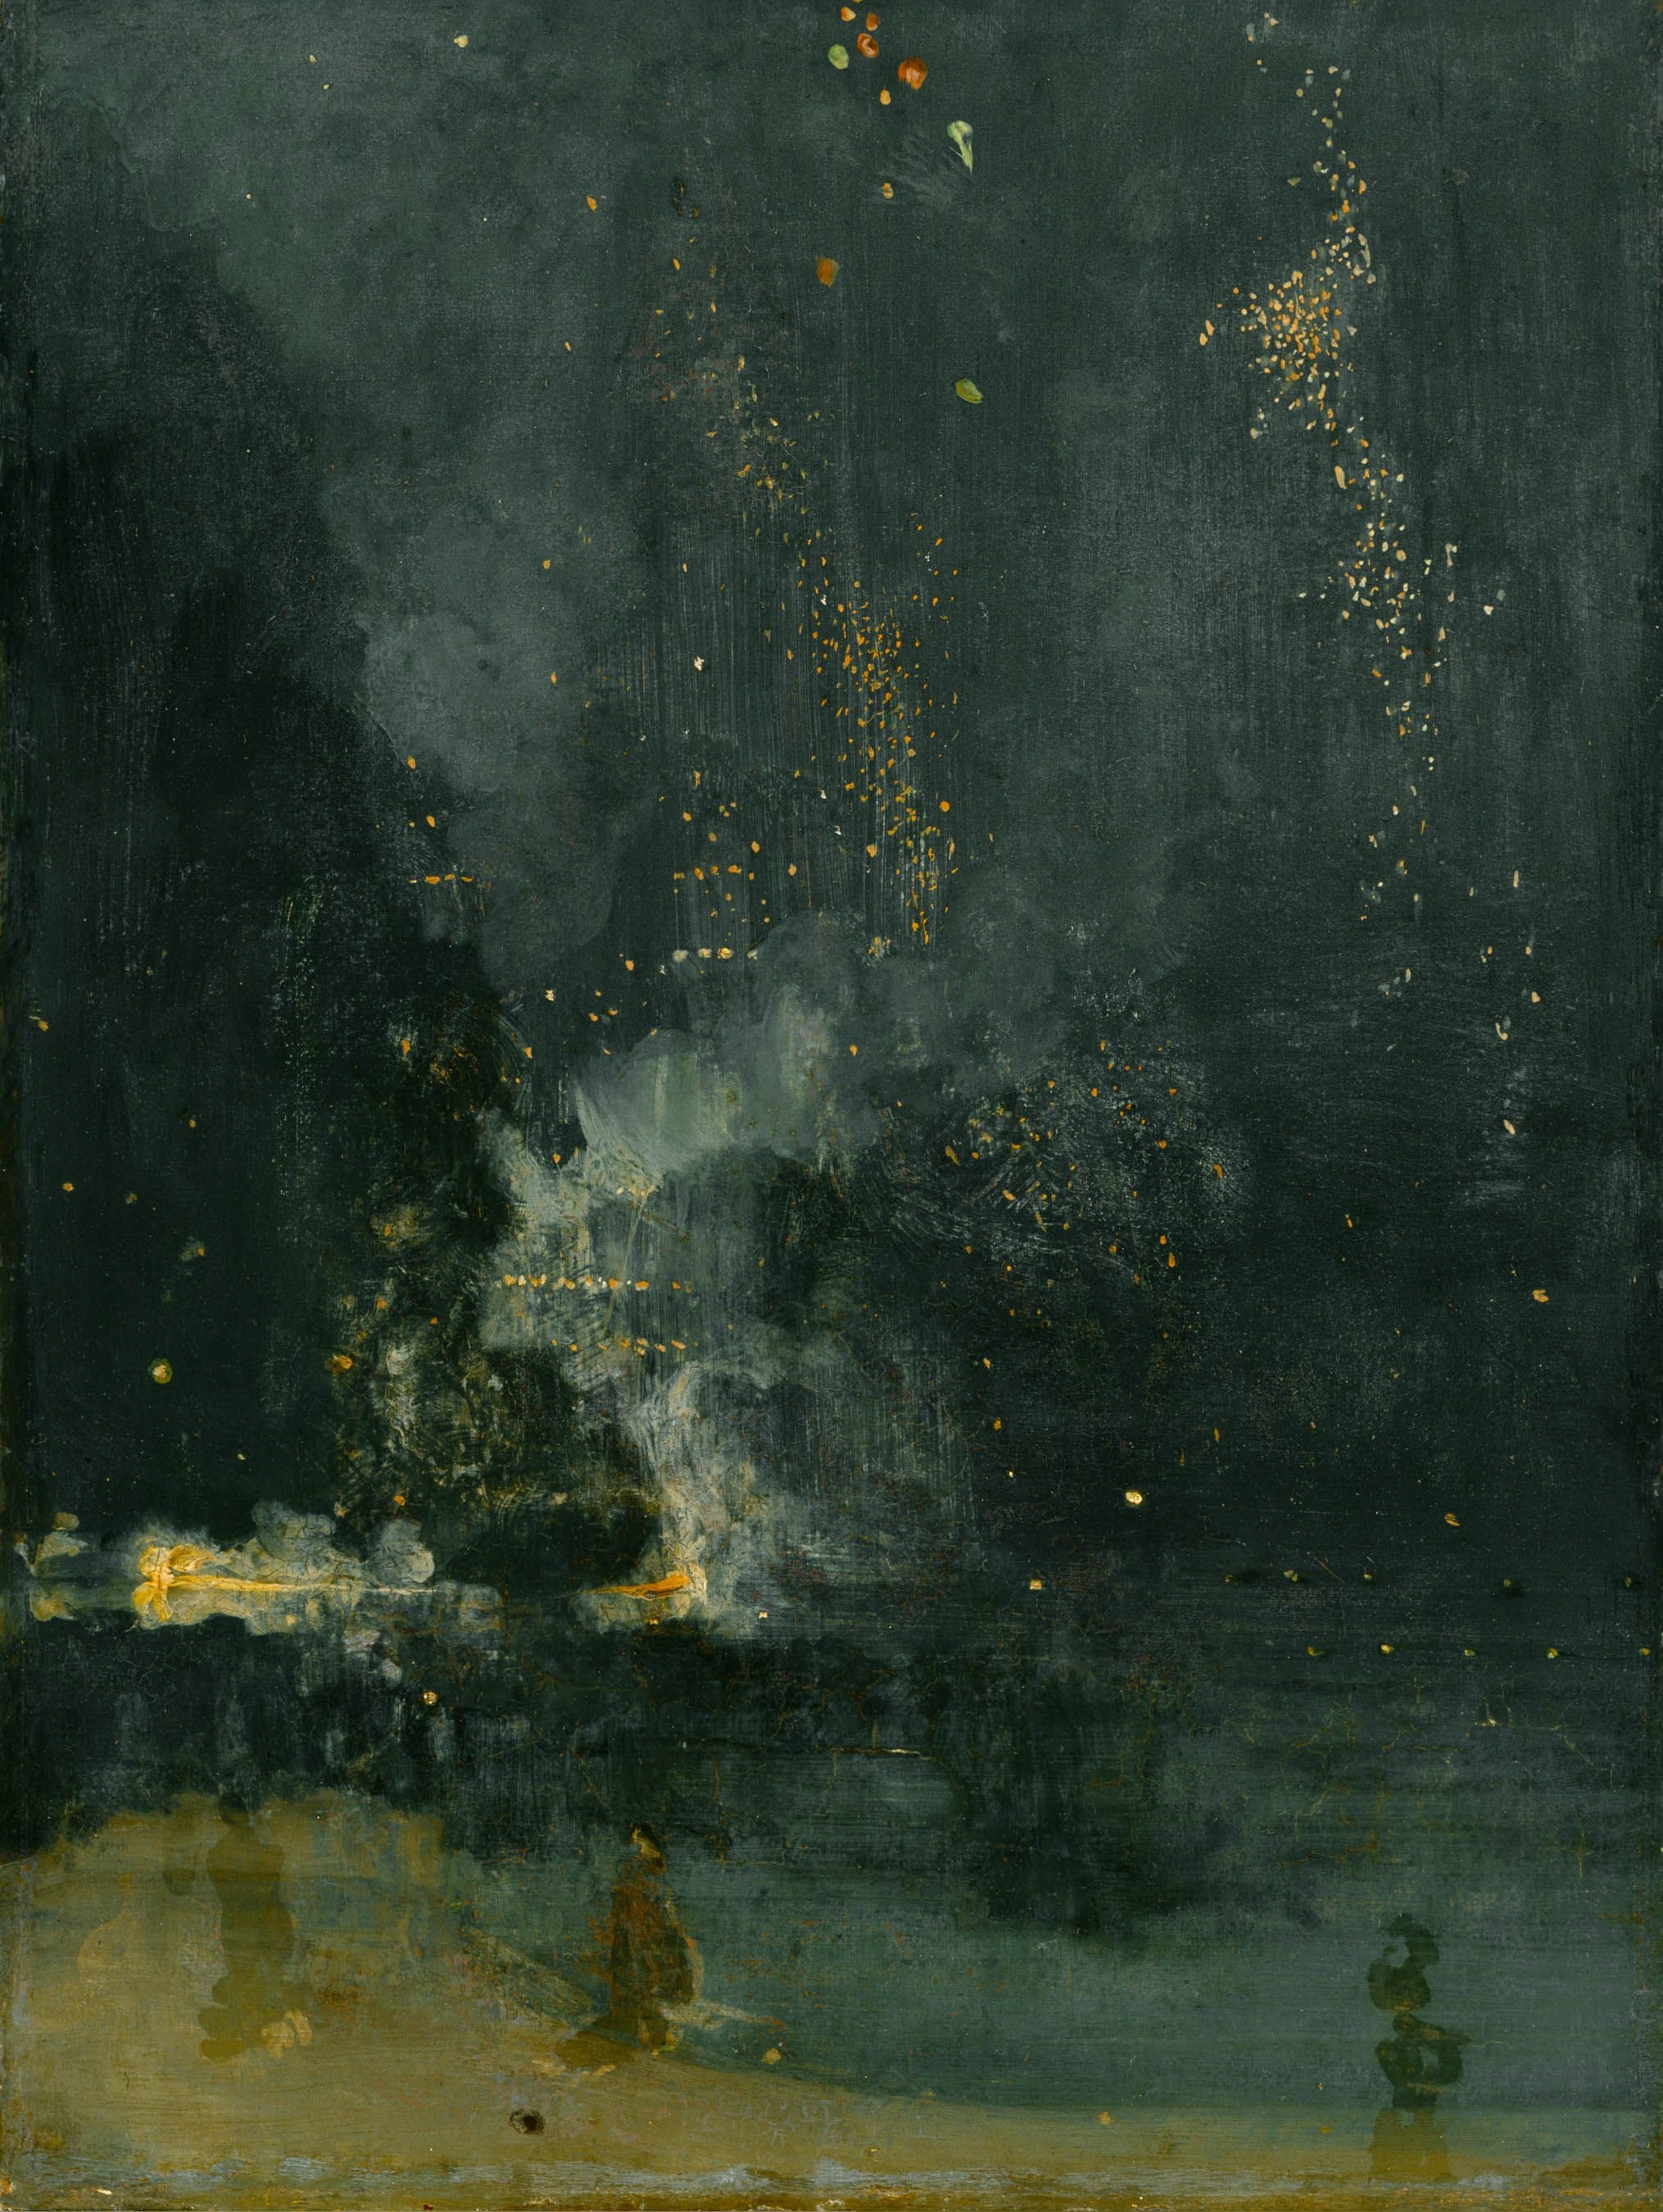 Nocturne en noir et or by James Abbott McNeill Whistler - vers 1872–77 - 60.3 × 46.6 cm Detroit Institute of Arts